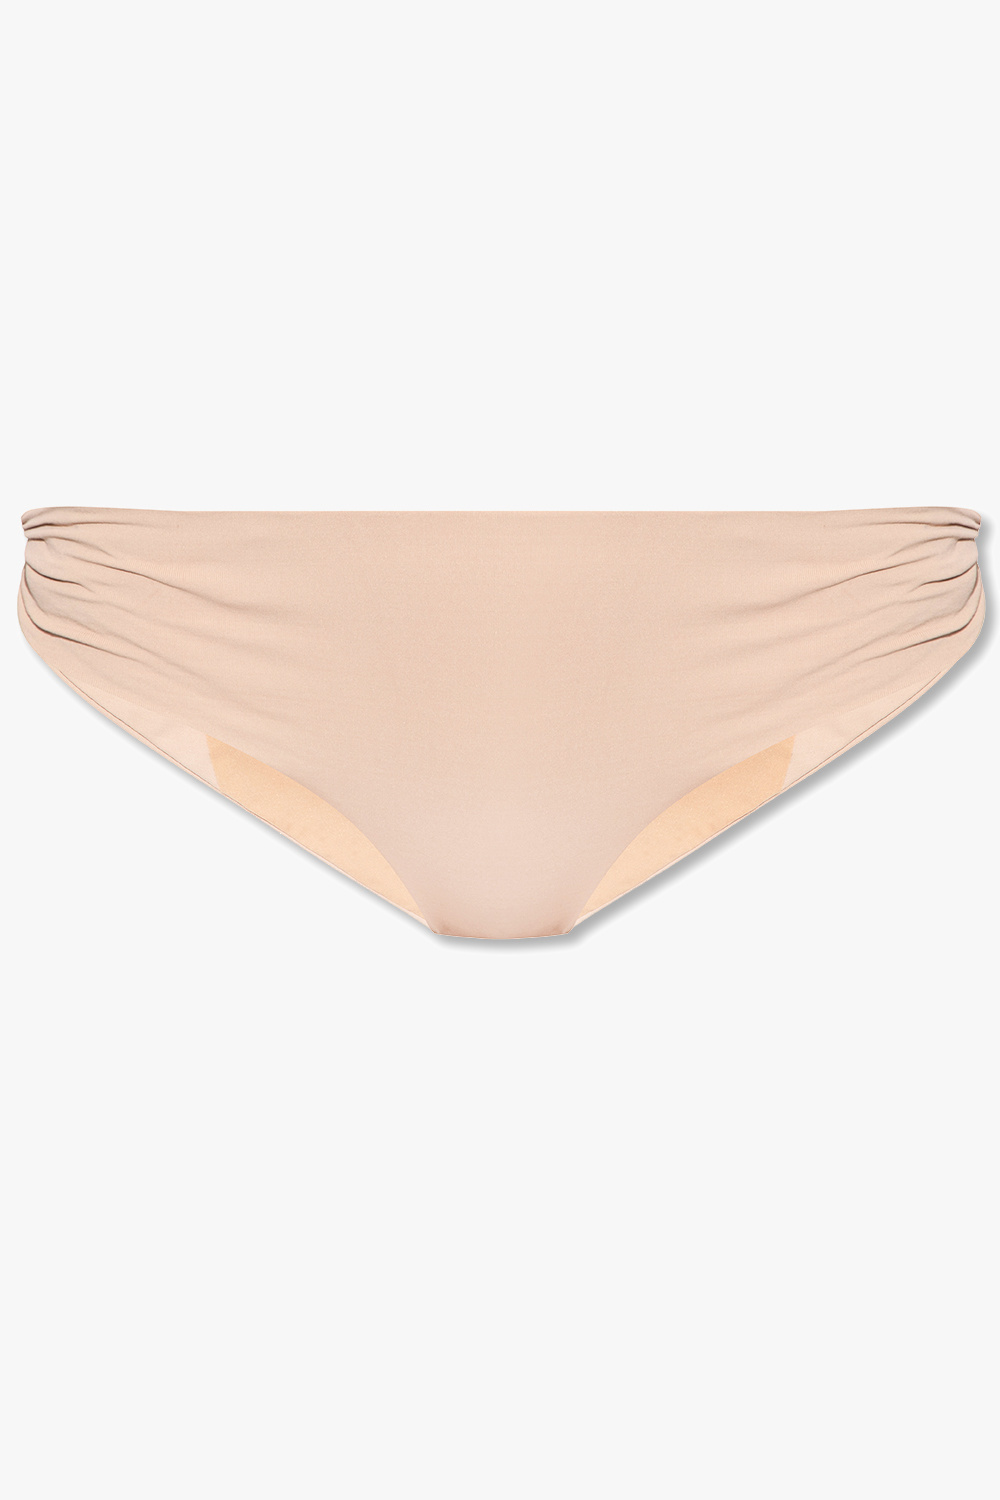 Marysia ‘Venice’ swimsuit bottom